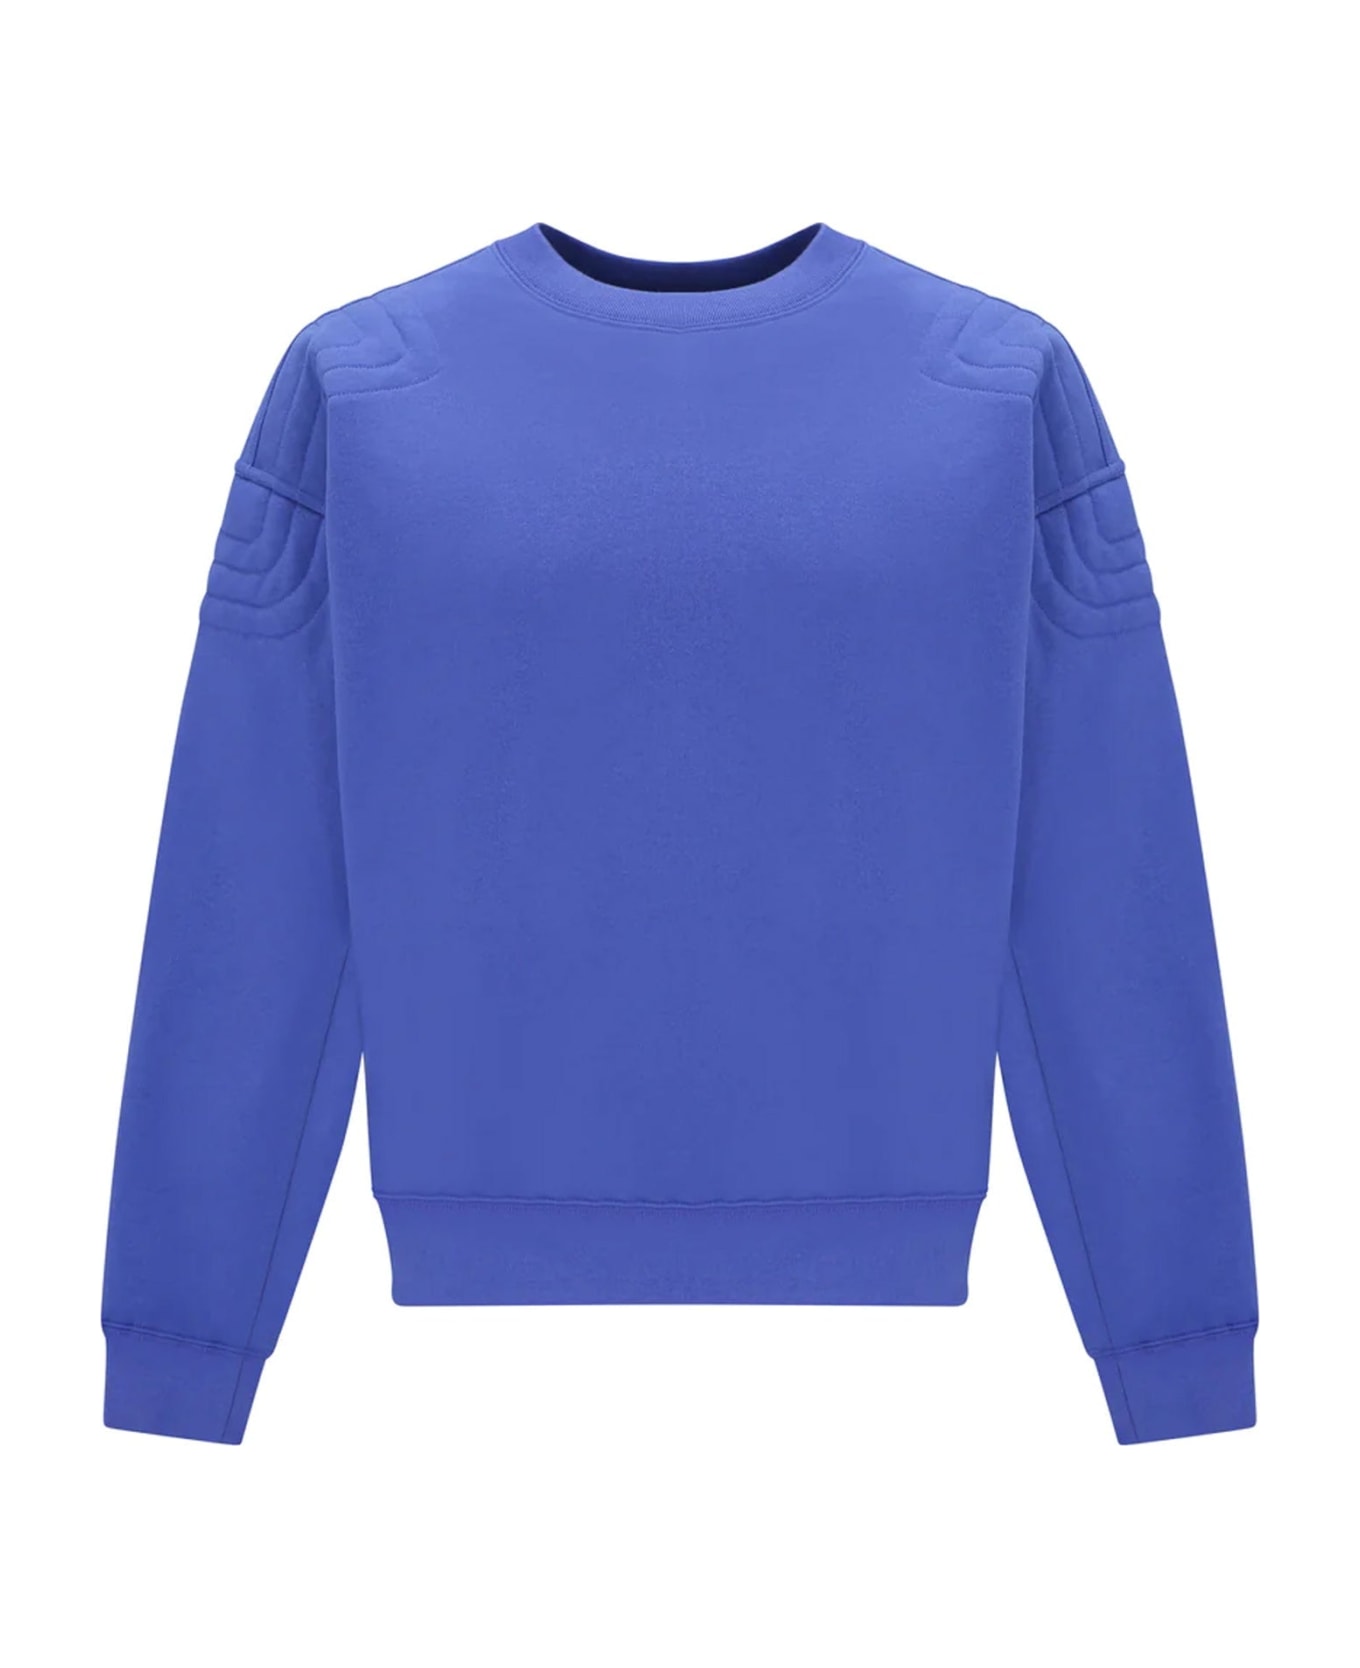 Gucci Cotton Sweatshirt - Blue